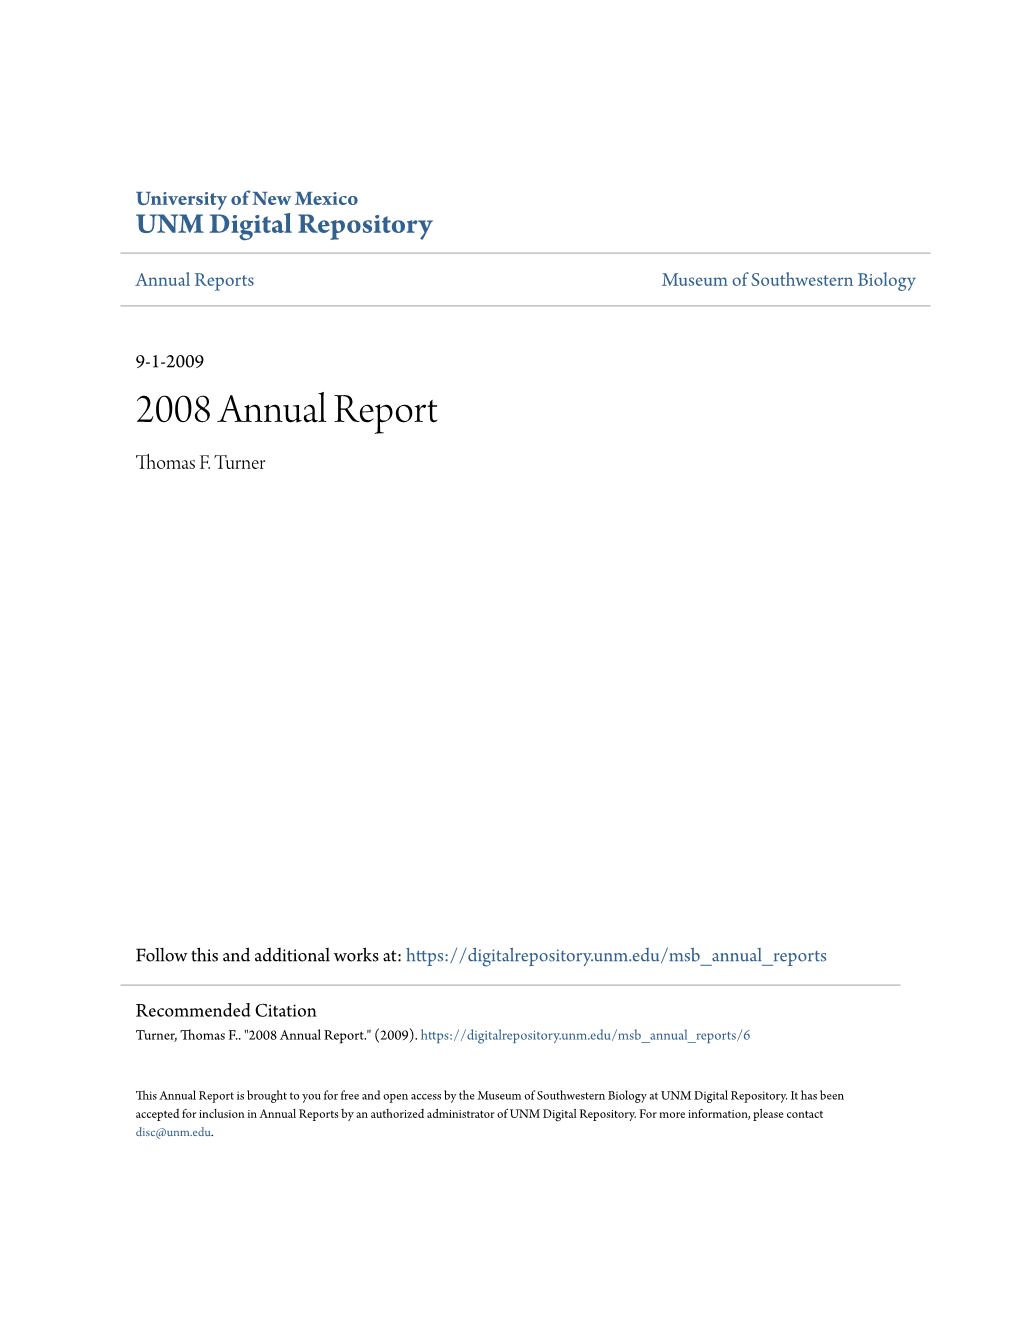 2008 Annual Report Thomas F